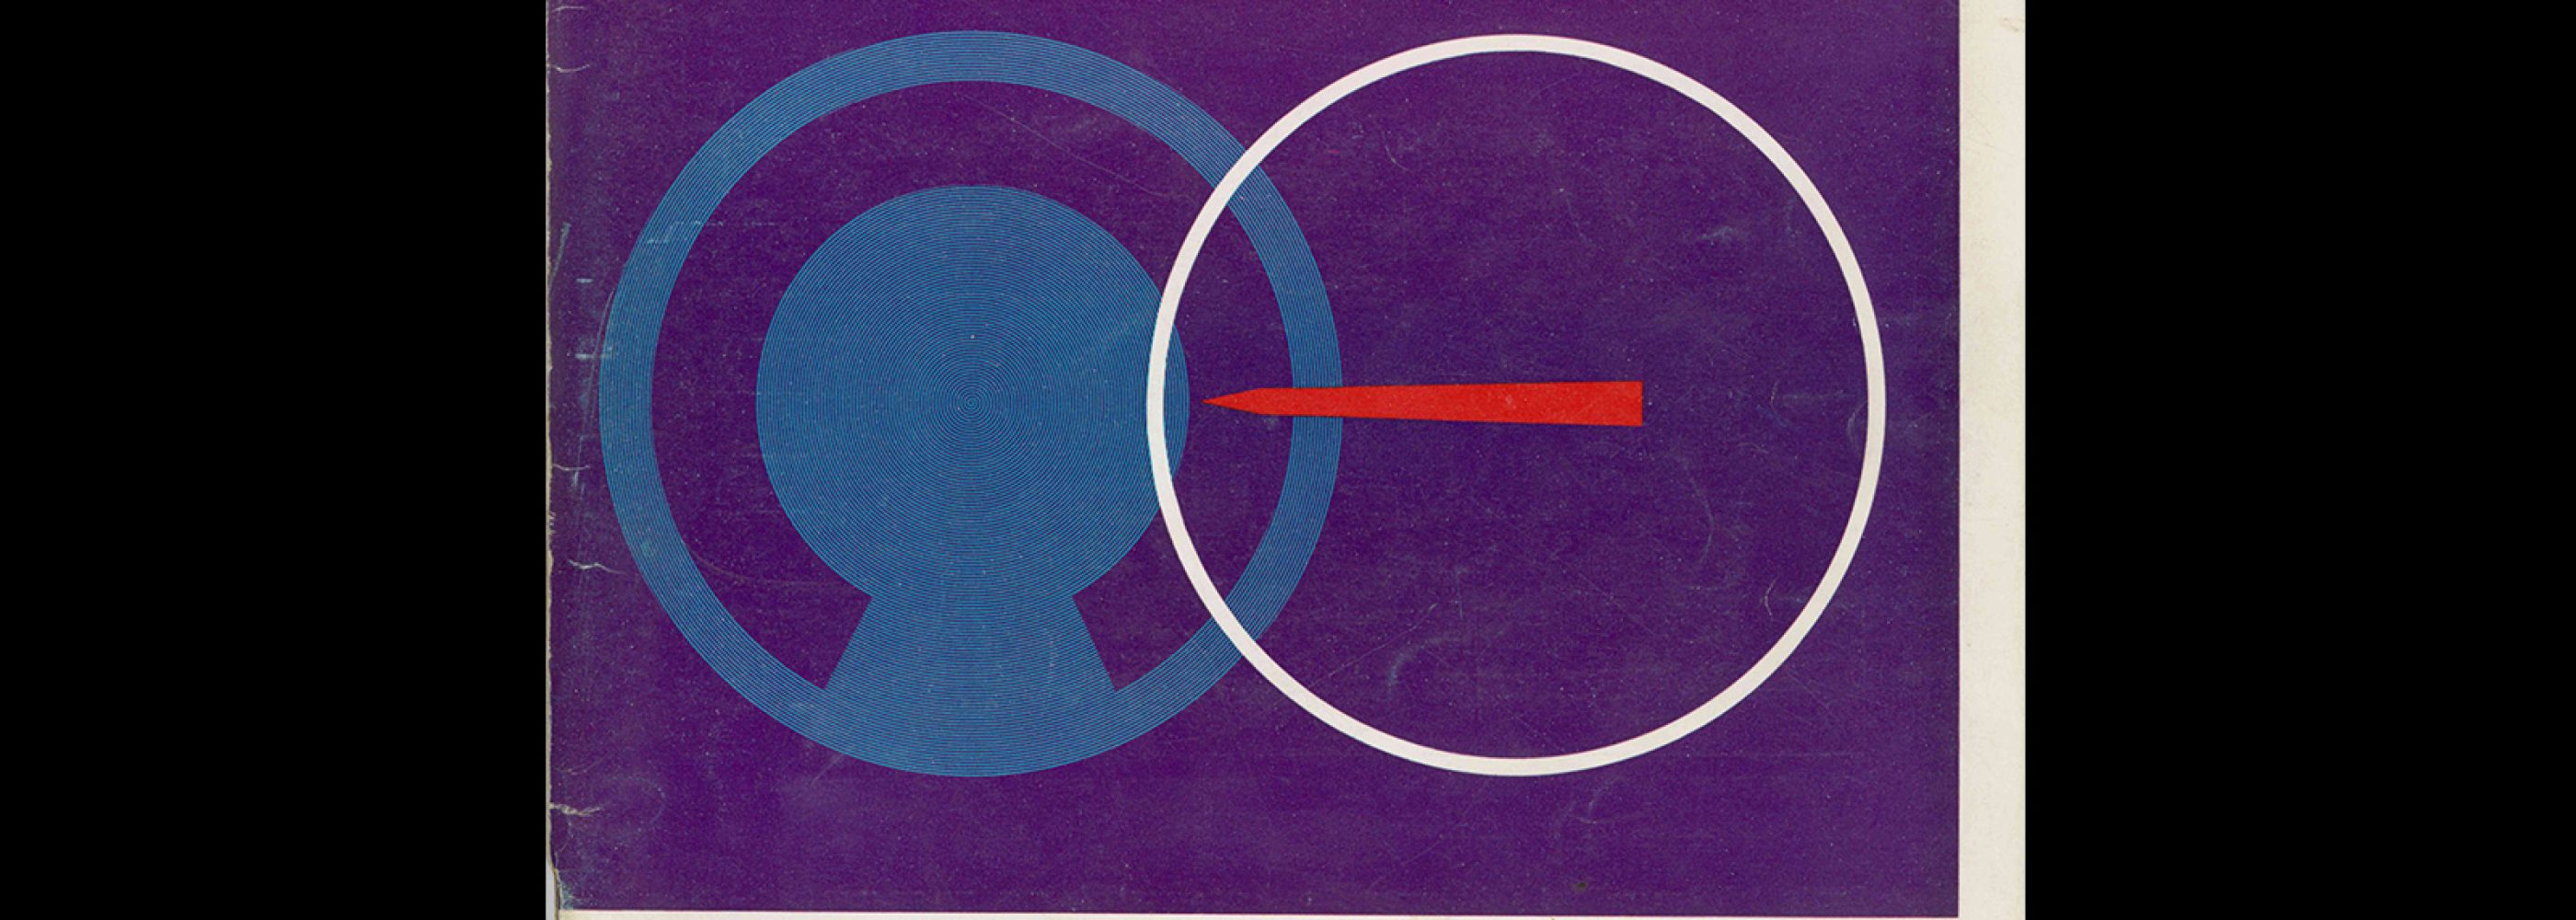 Design, Council of Industrial Design, 119, November 1958. Cover design by Peter Wildbur